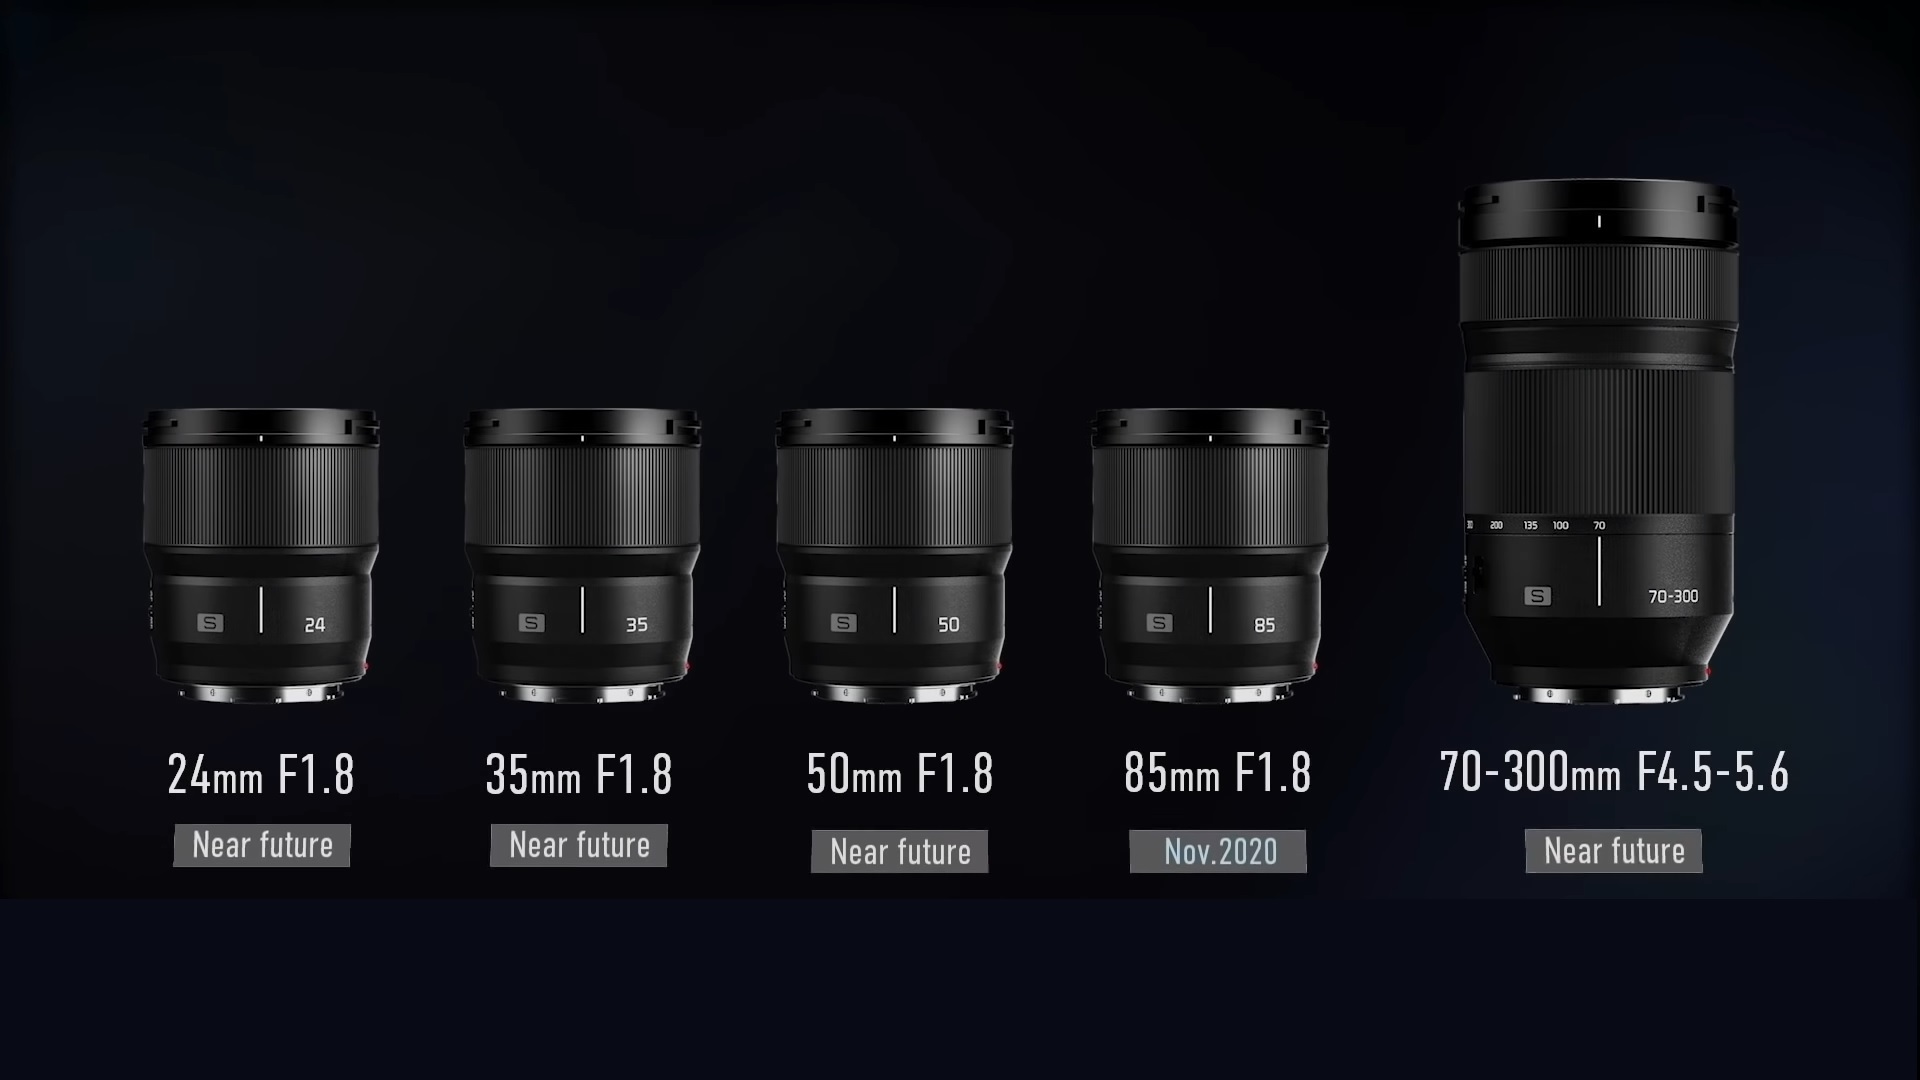 Ja Haas Kluisje Panasonic Teases New L-Mount Lenses - 24, 35, 50, 85mm f/1.8 Primes and  70-300mm Zoom | CineD